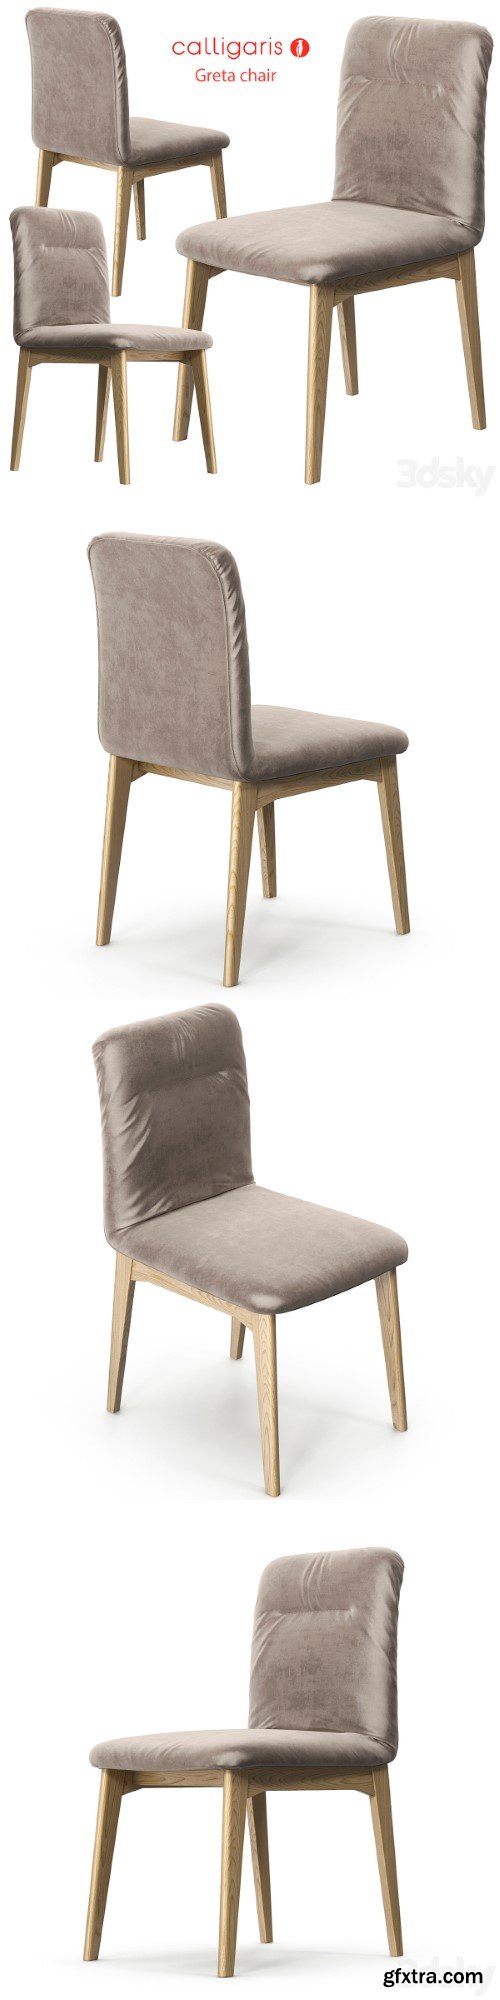 Calligaris Greta wood chair